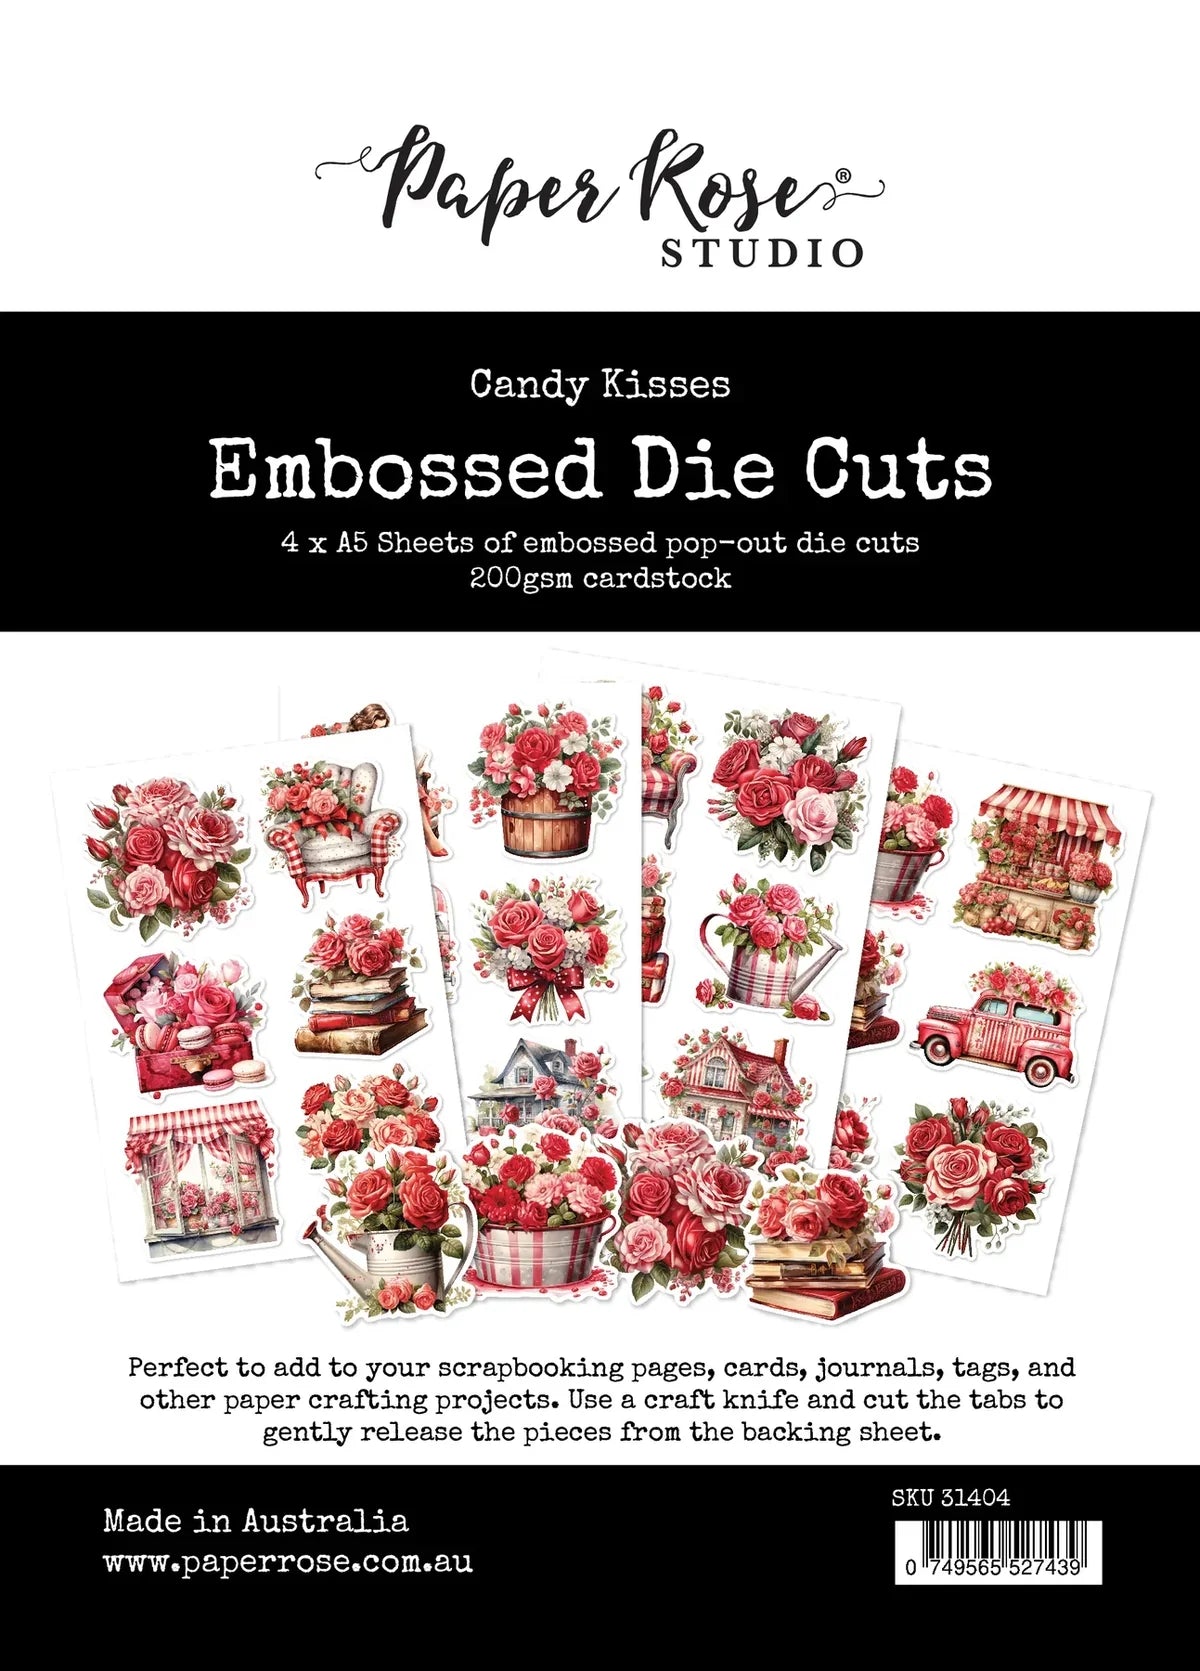 Embossed Die Cuts - Candy Kisses - Paper Rose